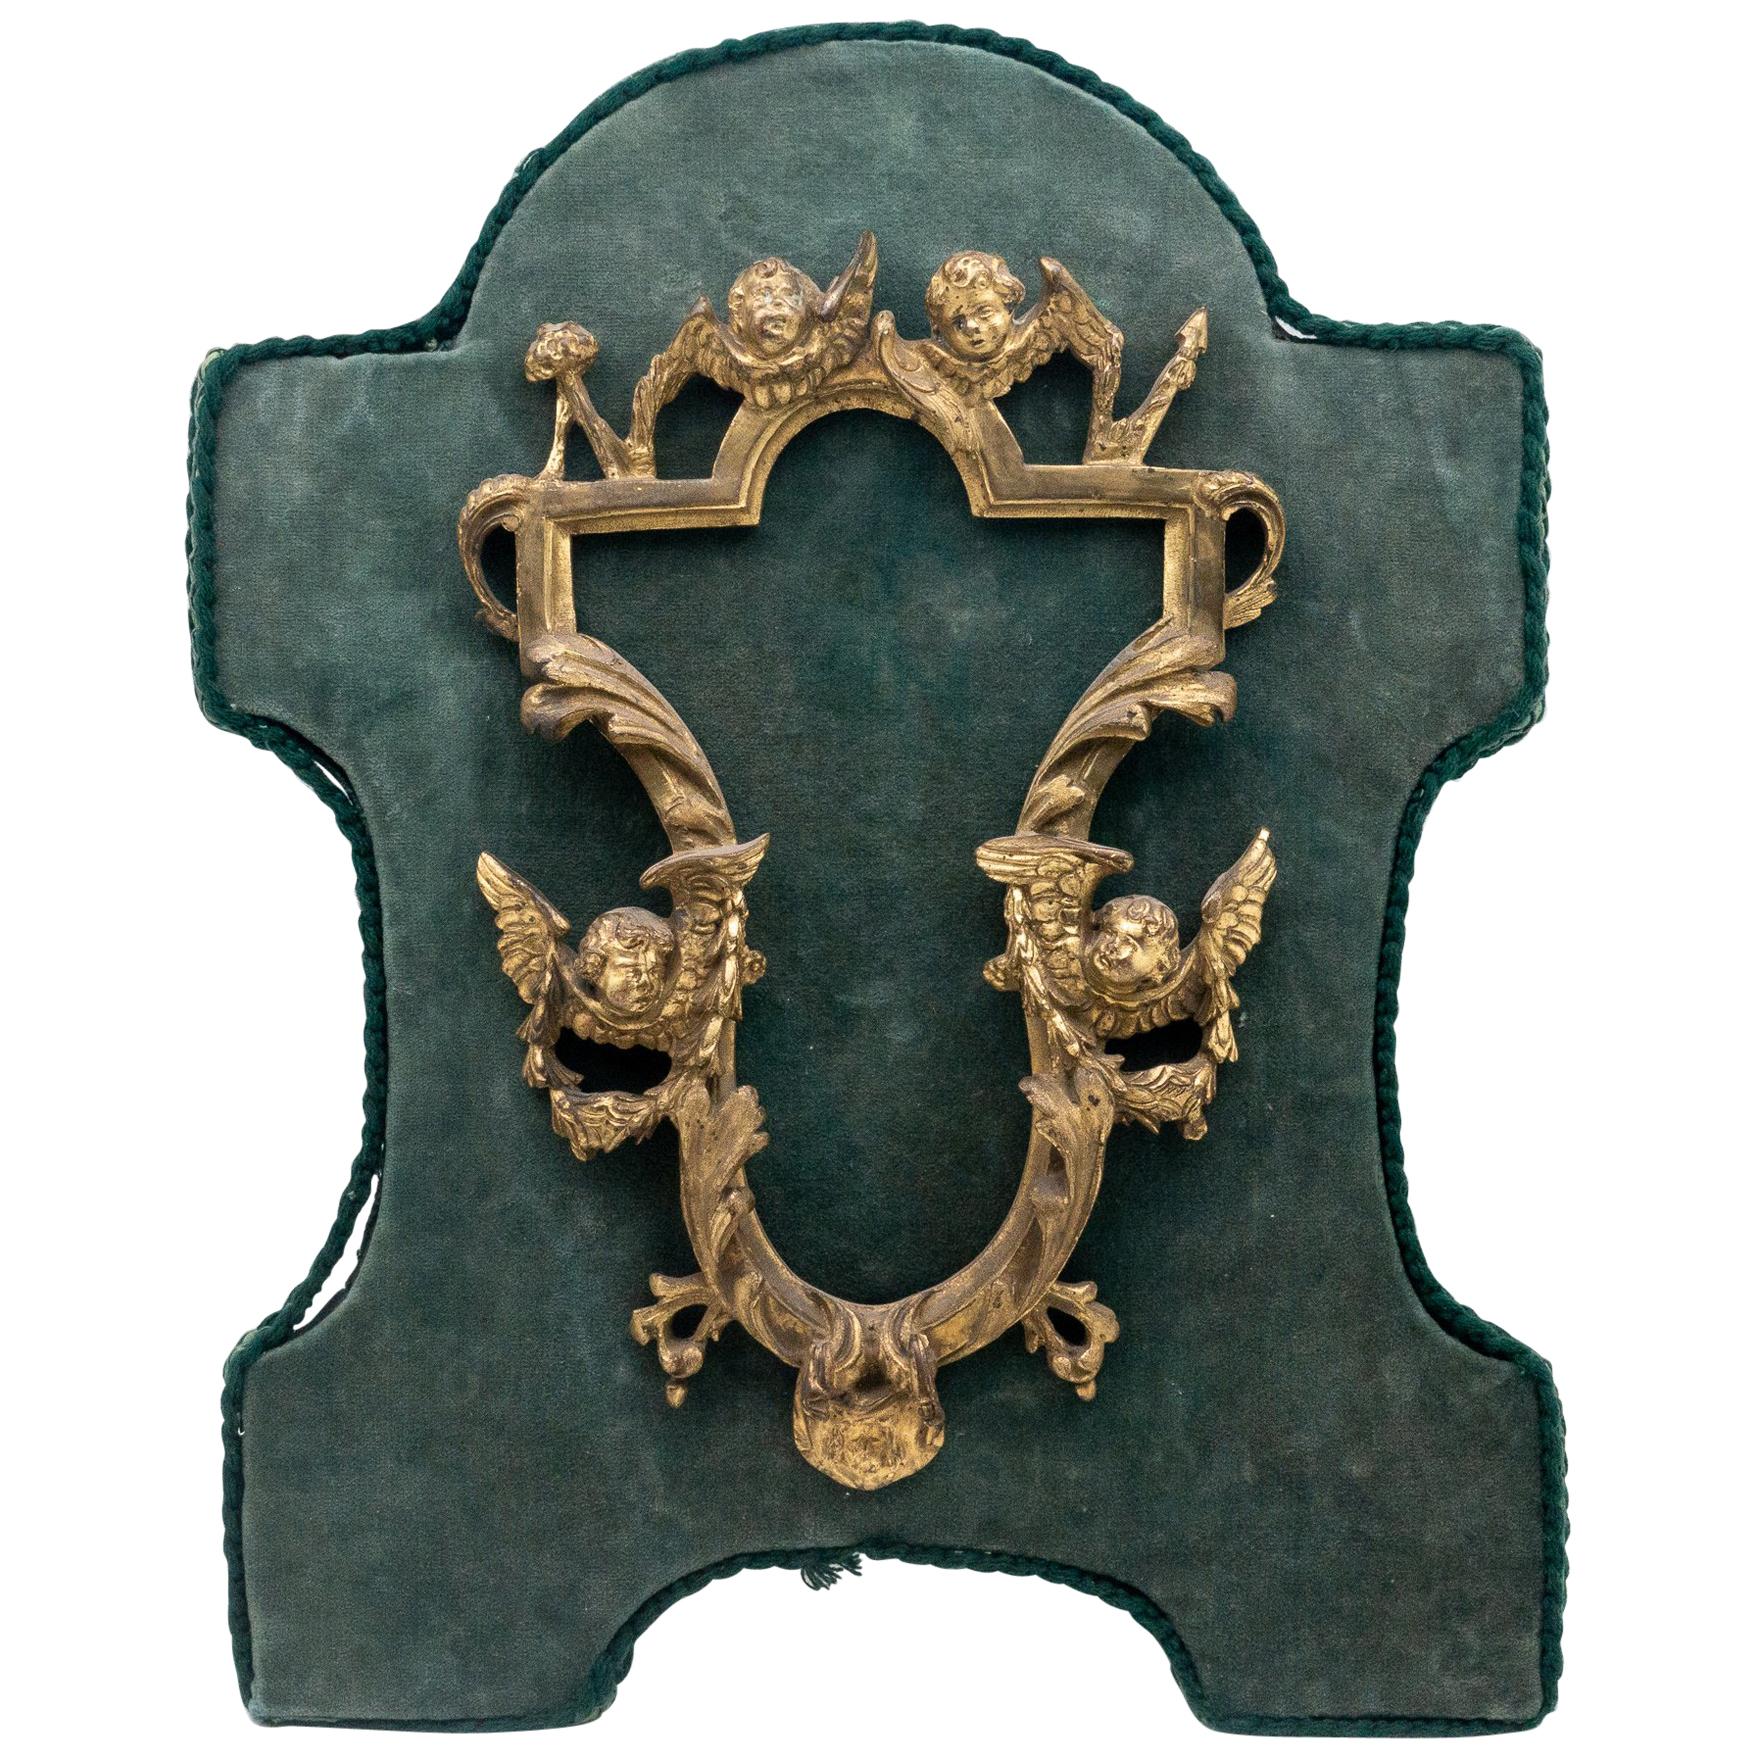 18th Century French Rococo Gilded Bronze Frame Mounted on Green Velvet